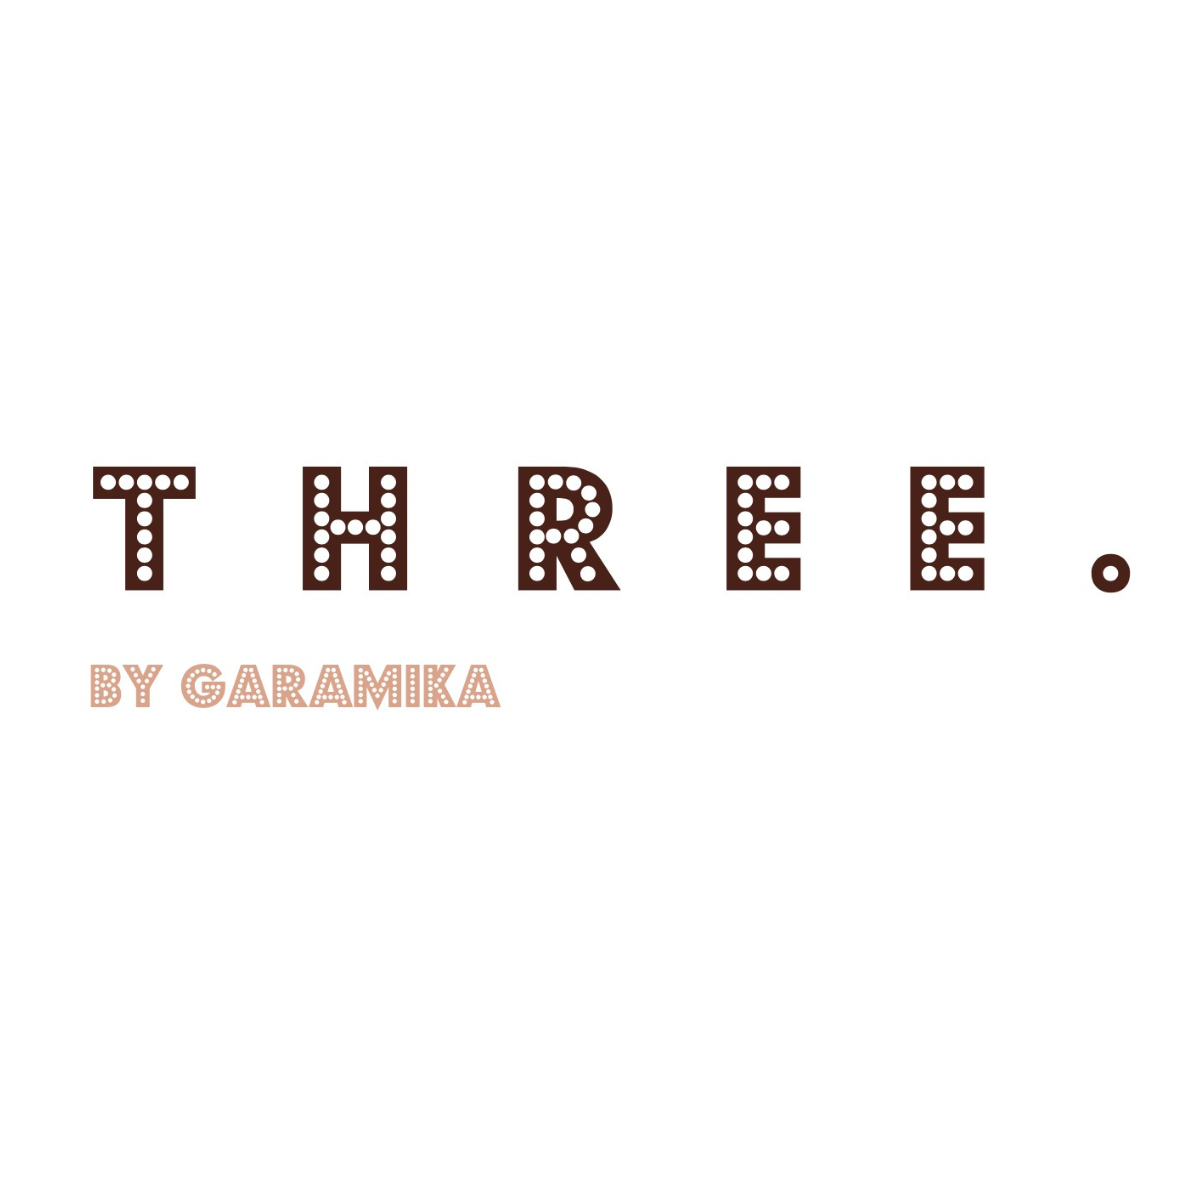 Three by Garamika